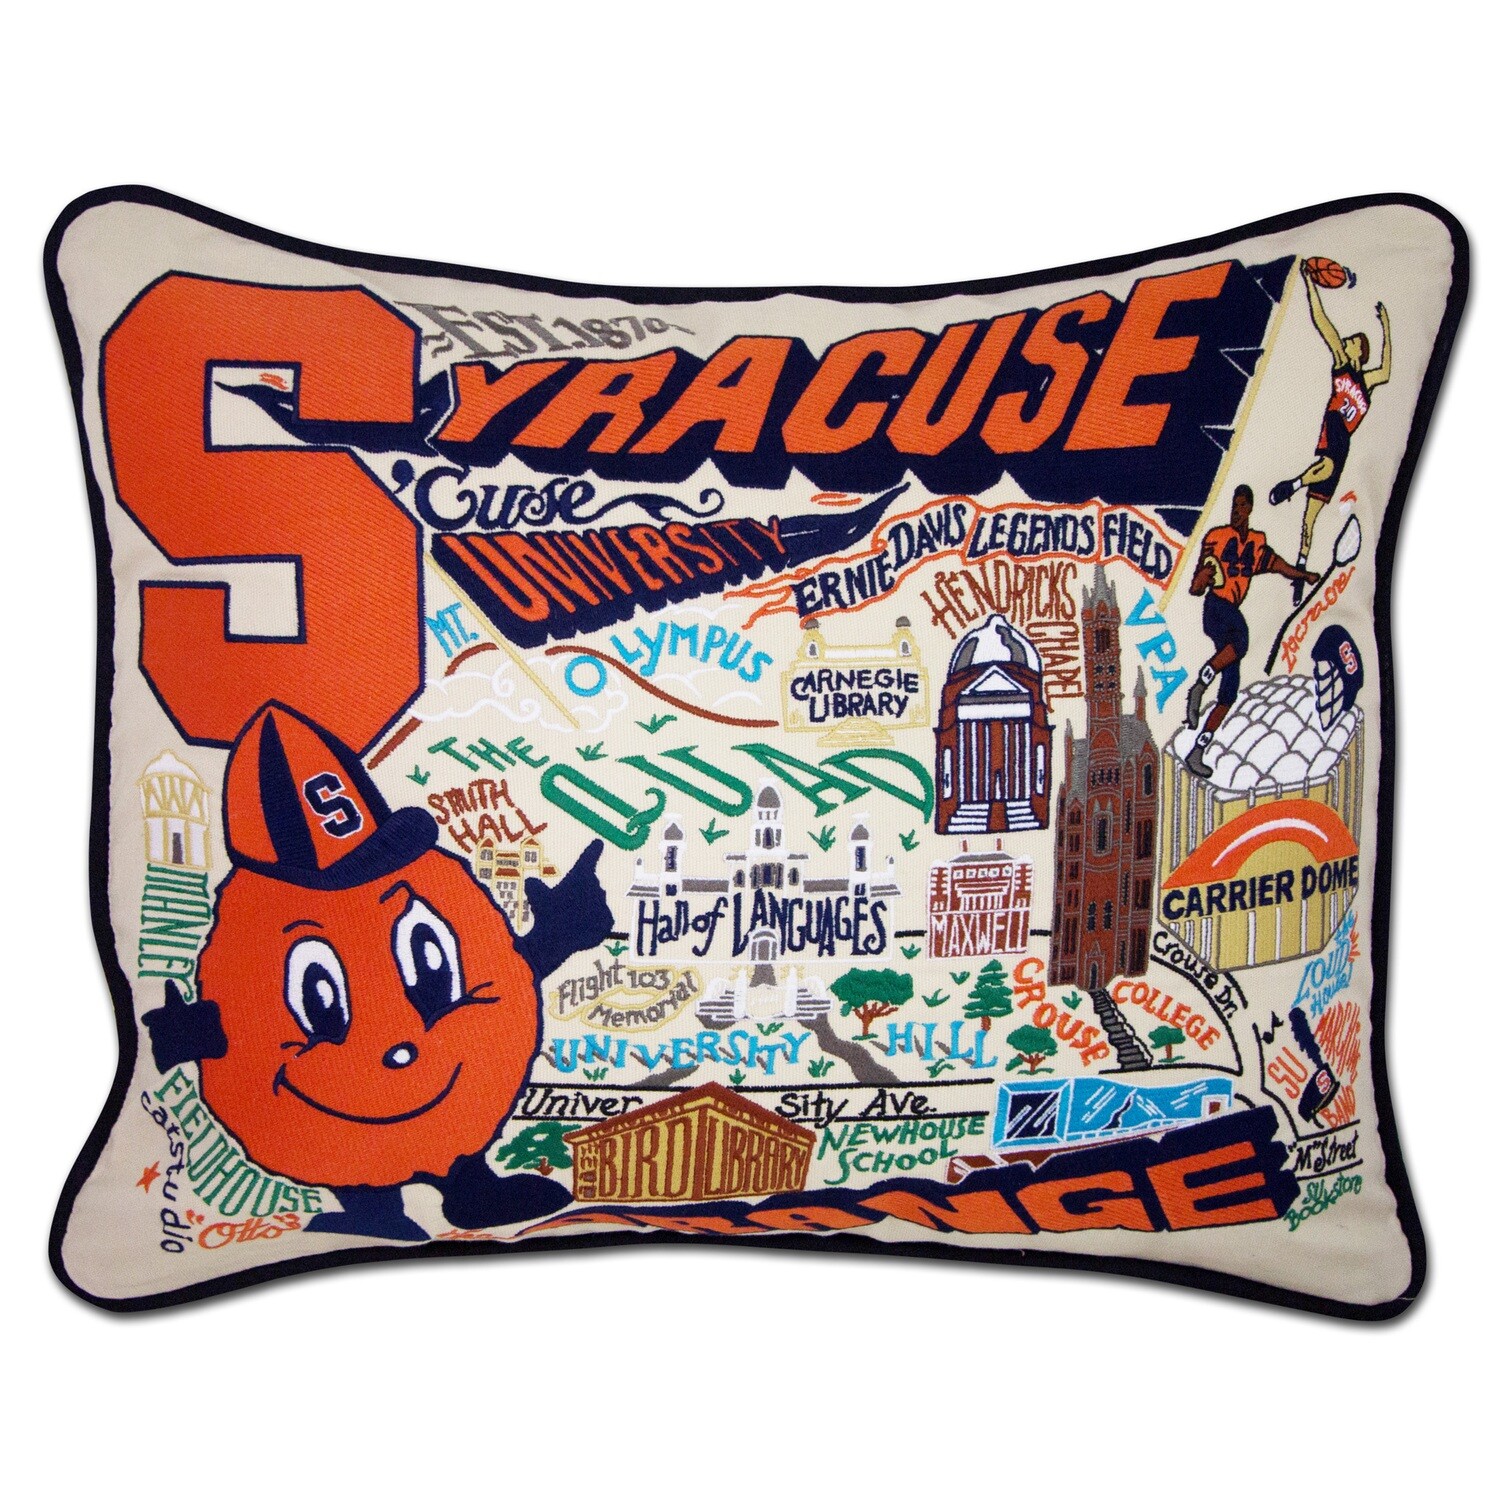 Syracuse University pillow